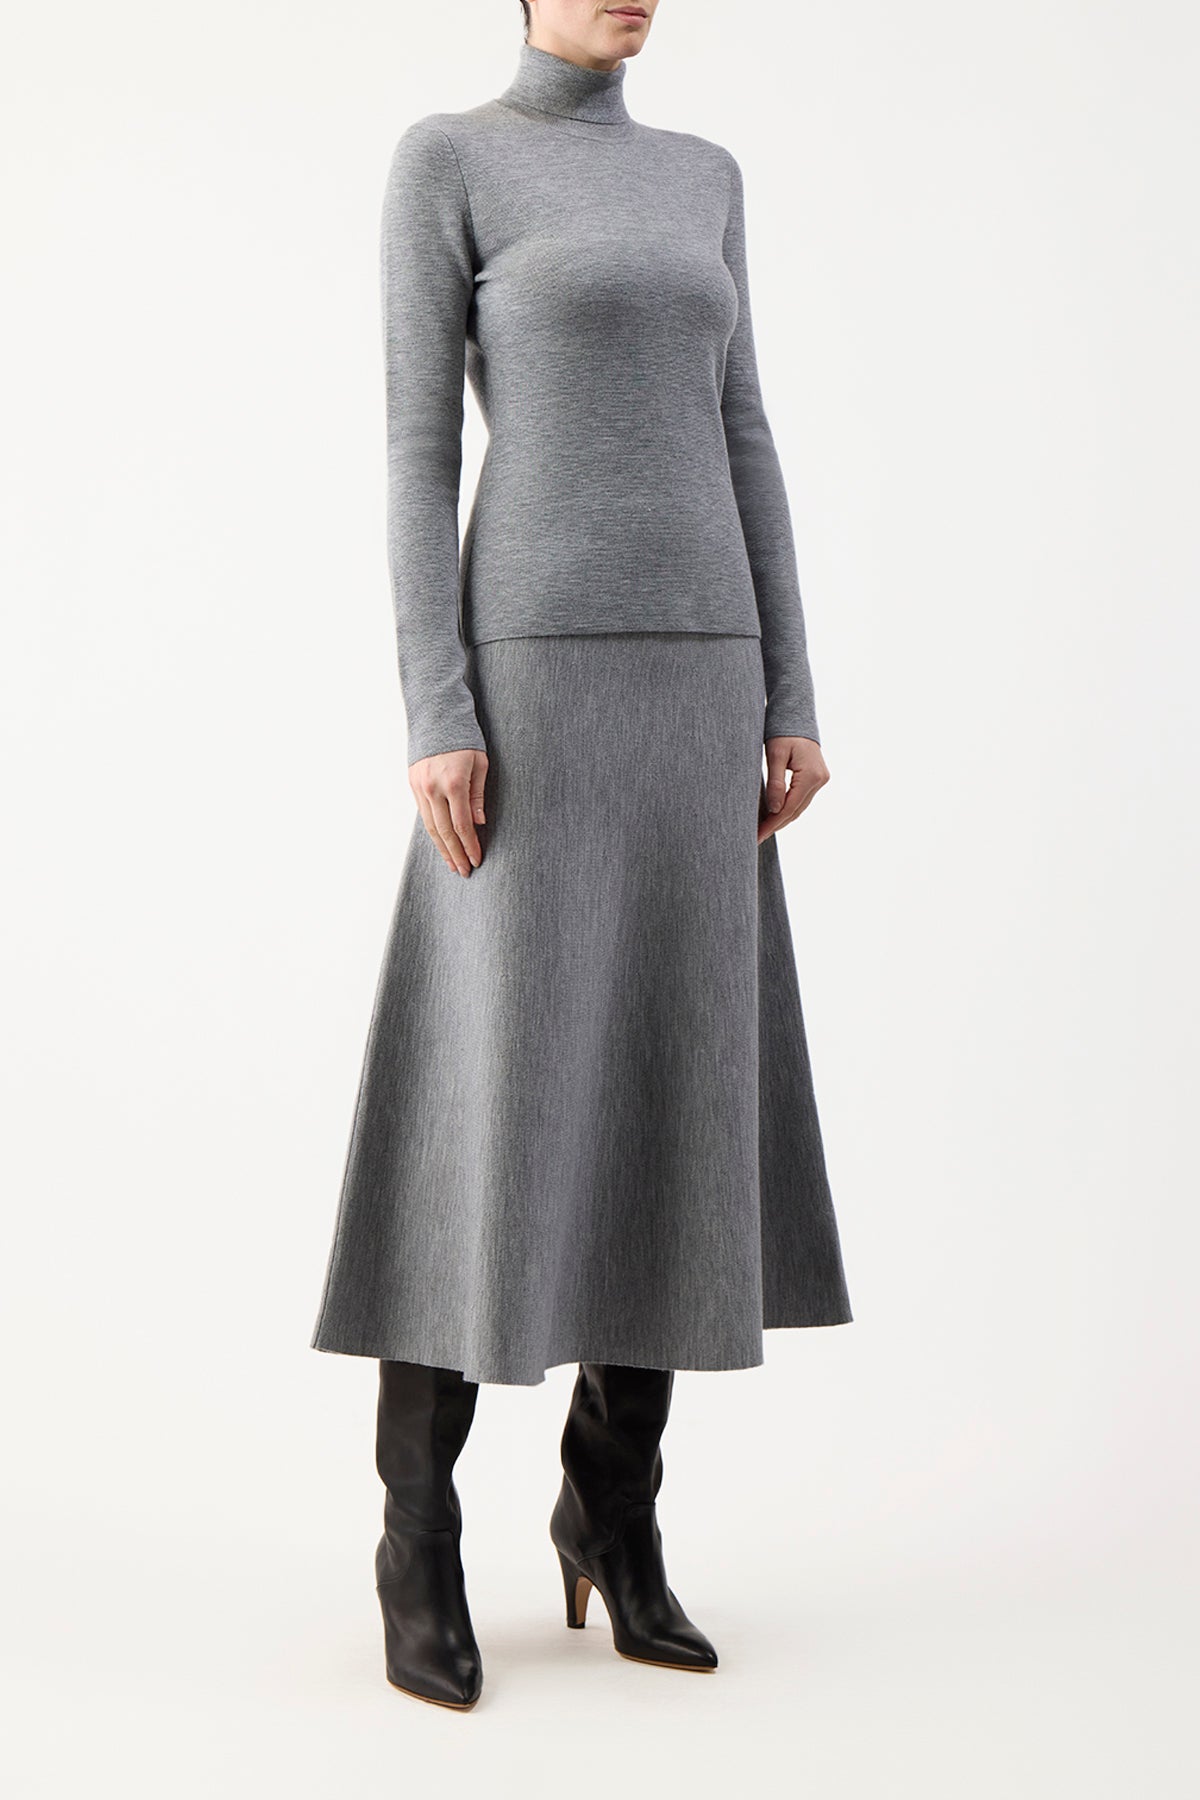 Freddie Skirt in Cashmere Wool – Gabriela Hearst